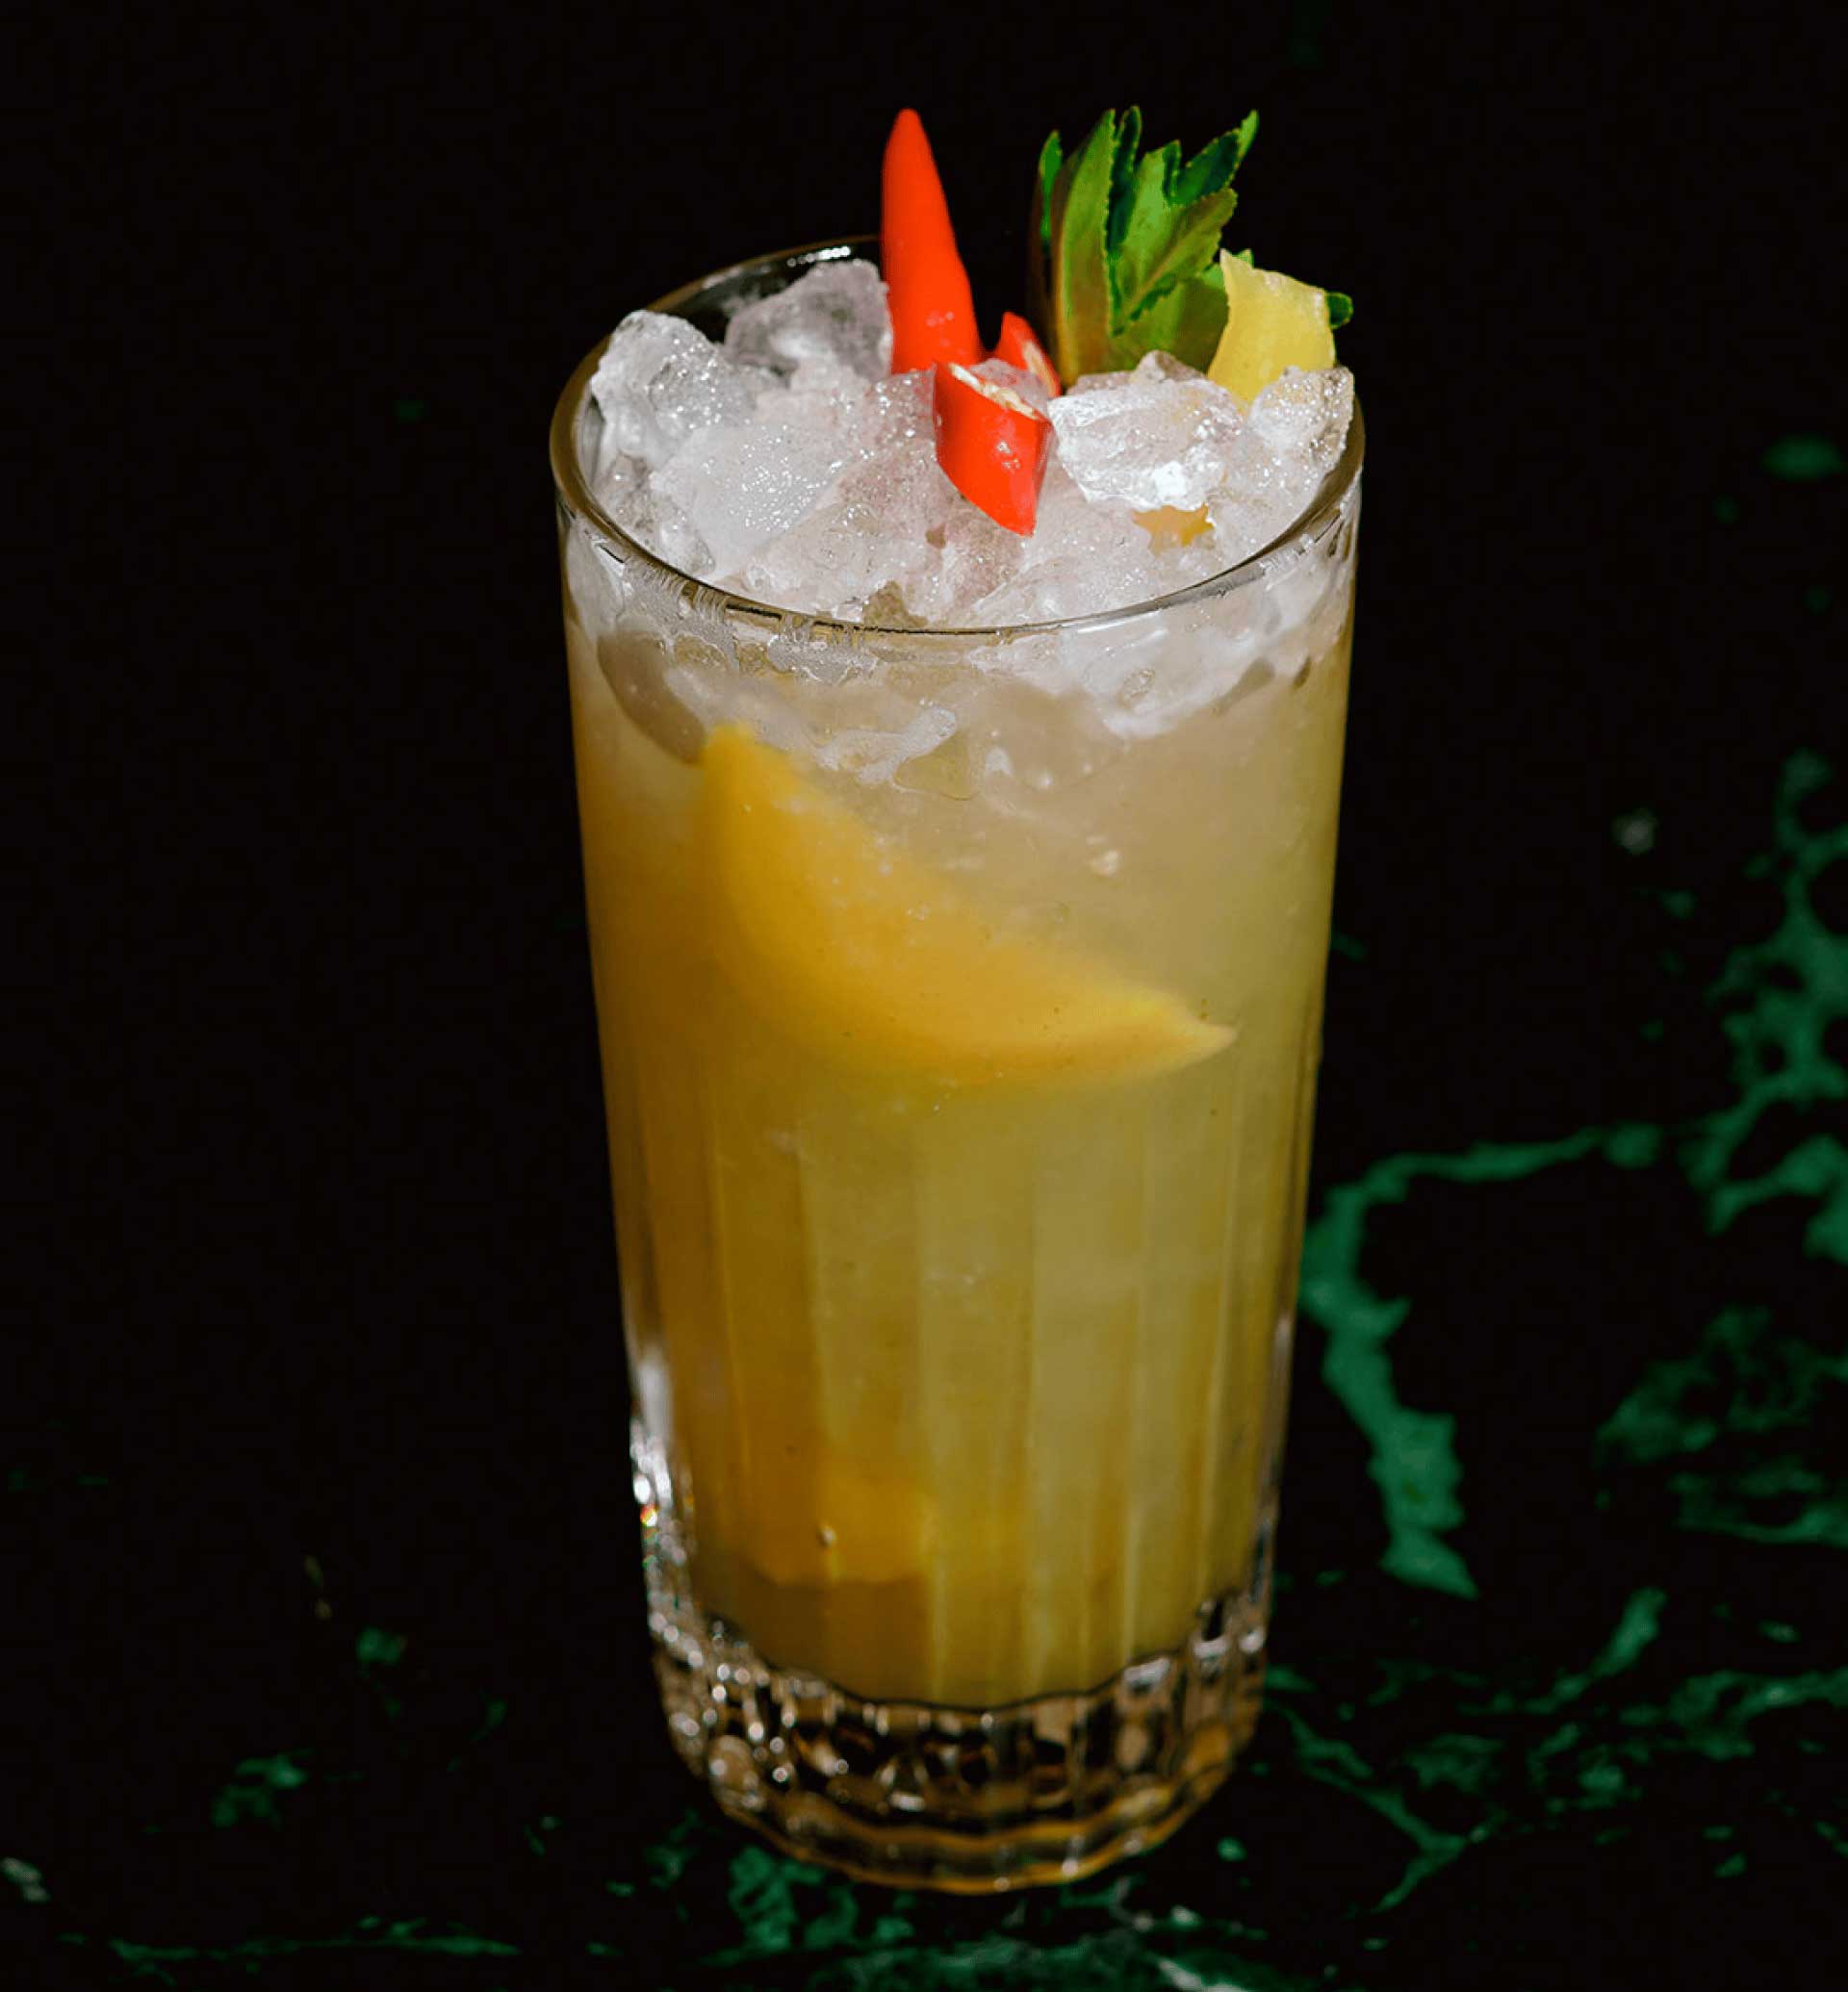 Lemon cocktail